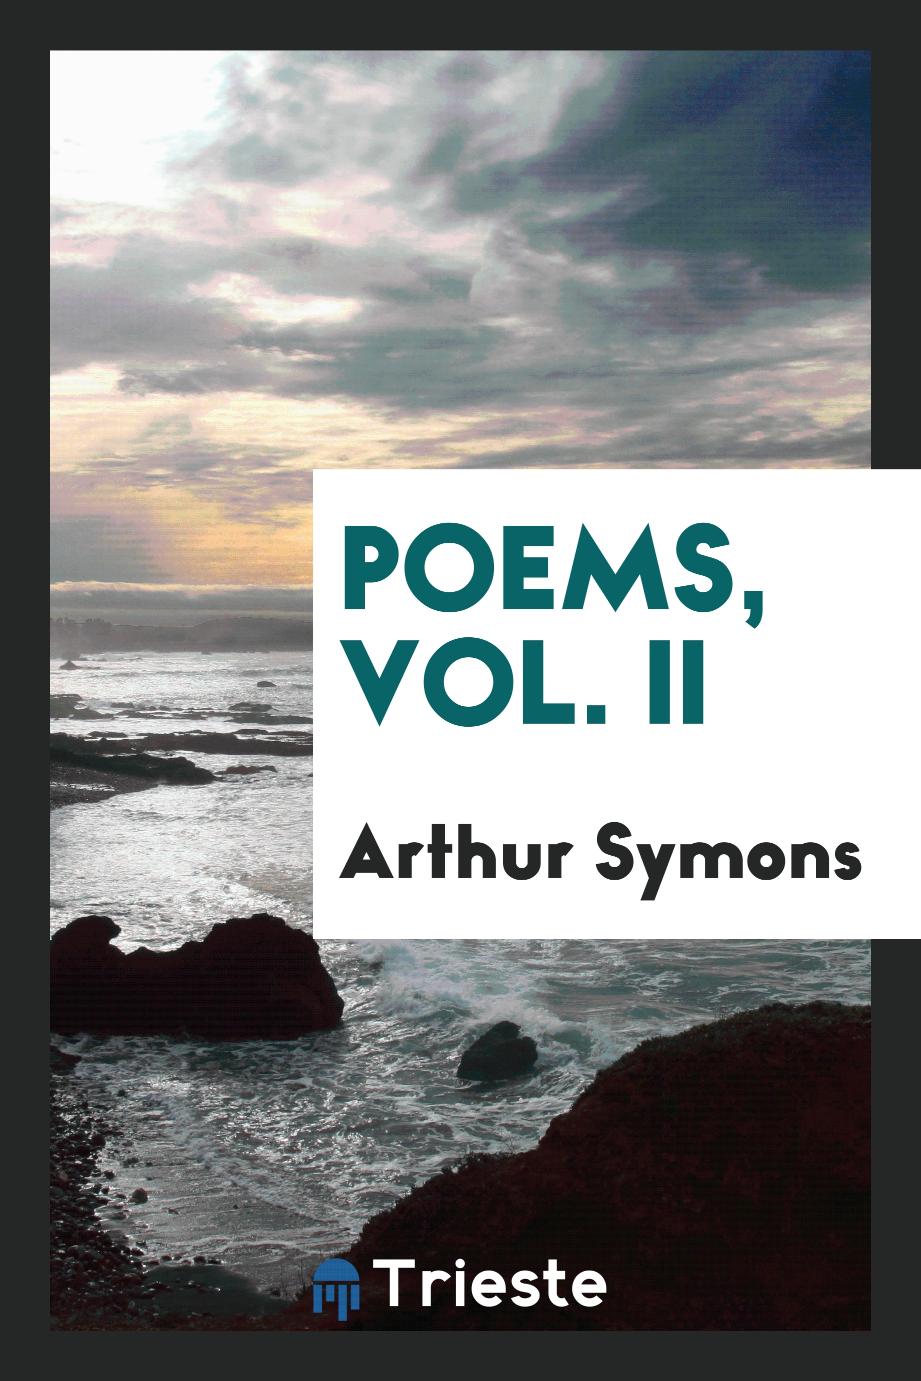 Poems, Vol. II